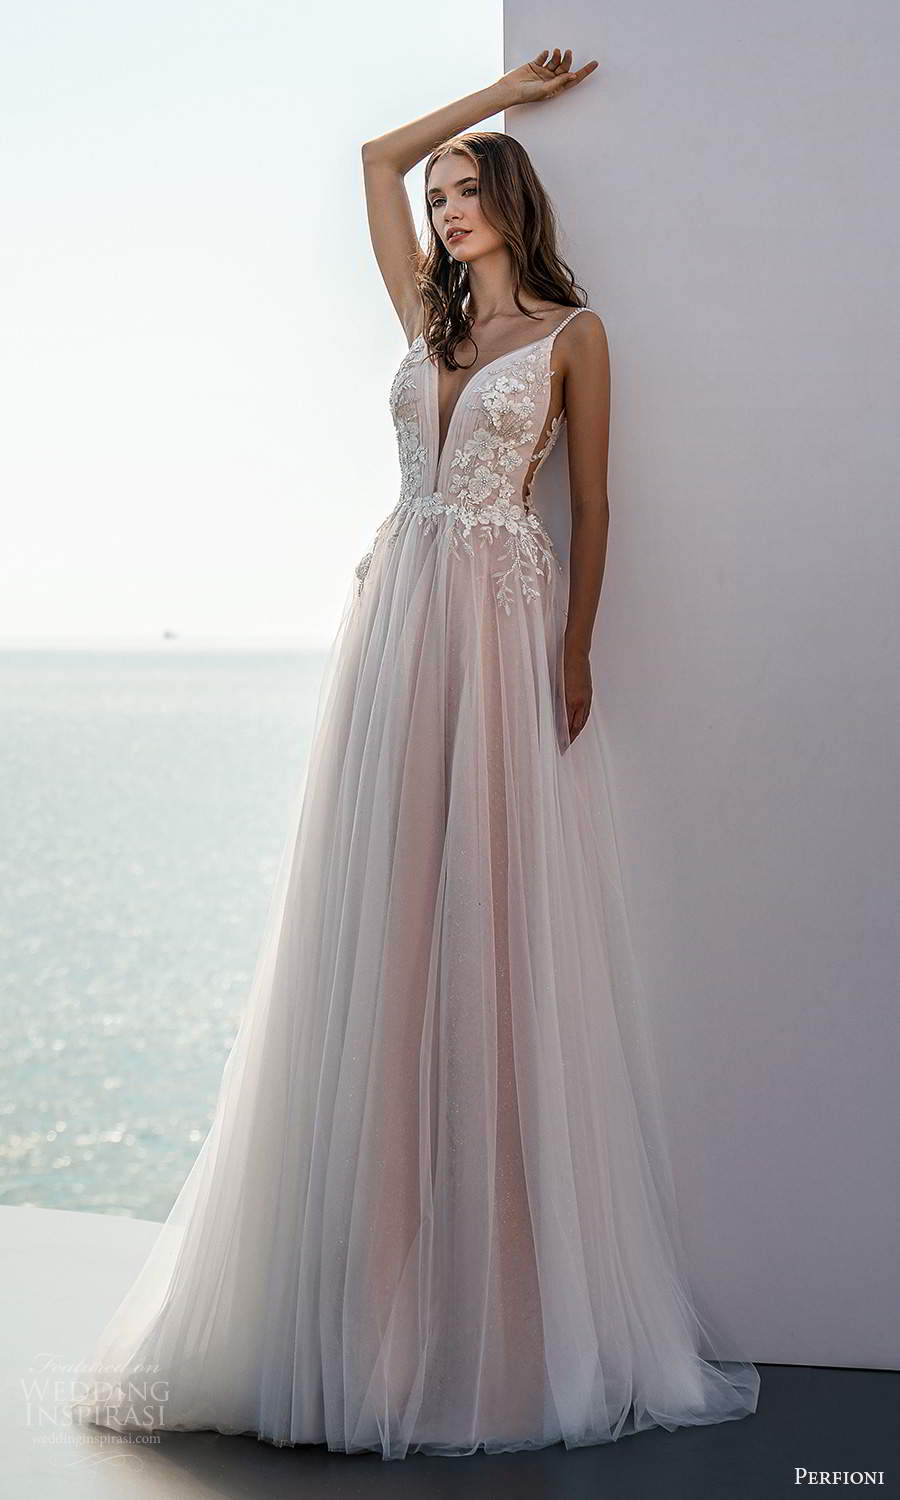 perfioni 2021 bridal sleeveless straps plunging v neckline embellished bodice a line ball gown wedding dress chapel train blush (14) mv